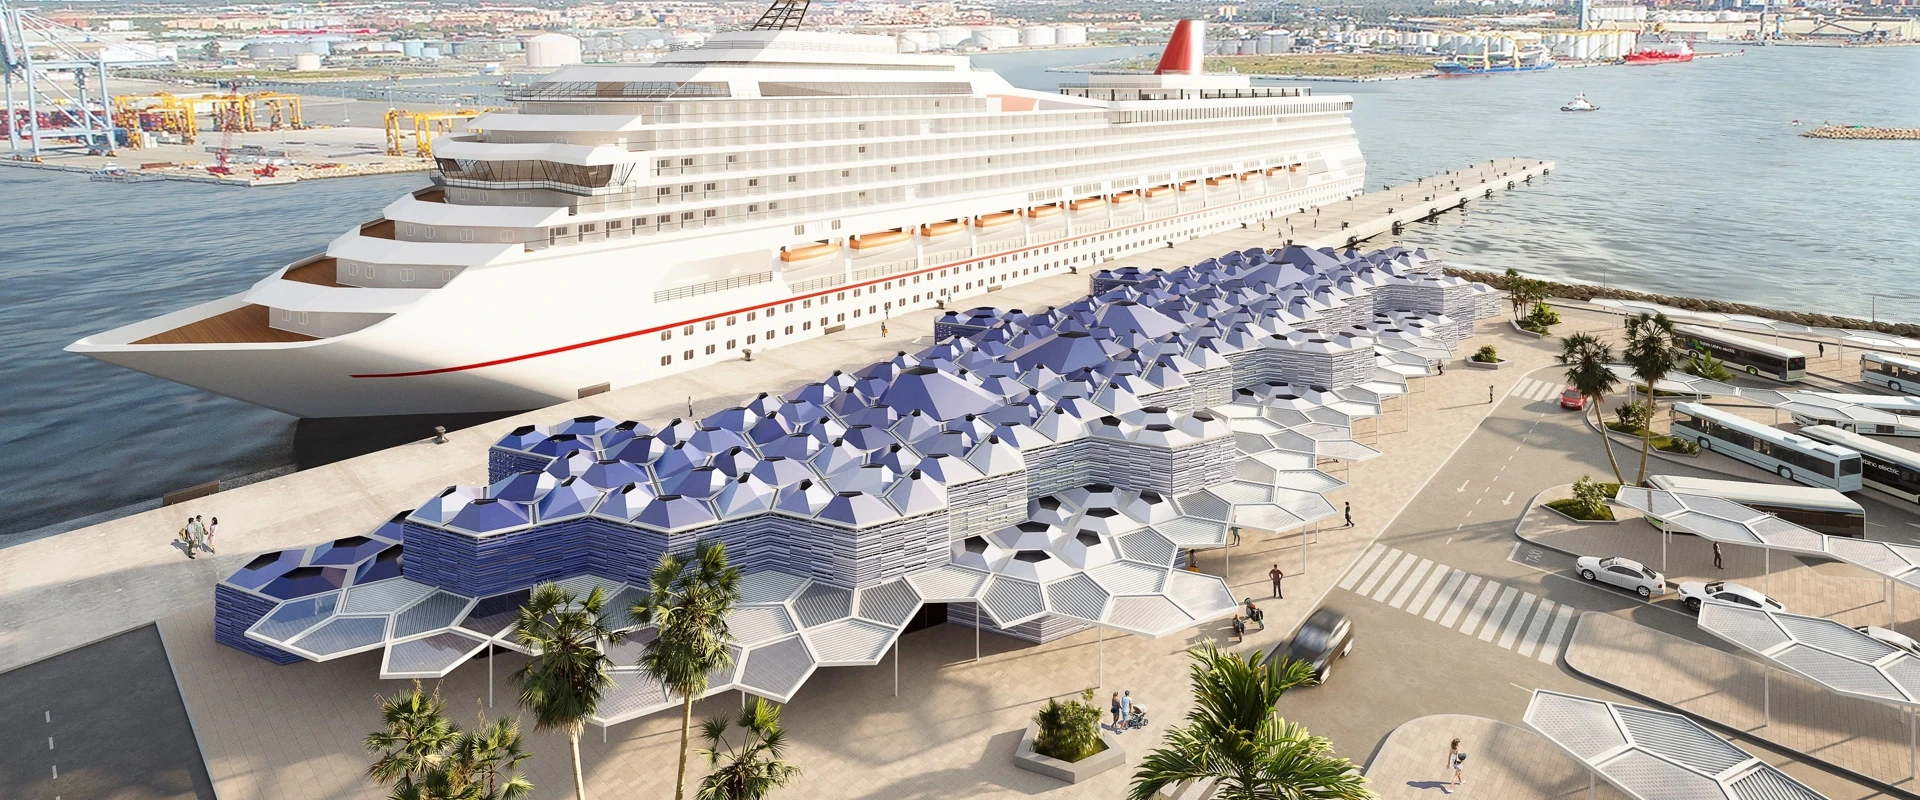 UK Global Ports Holding, Preferred Bidder for Management of Casablanca Cruise Terminal